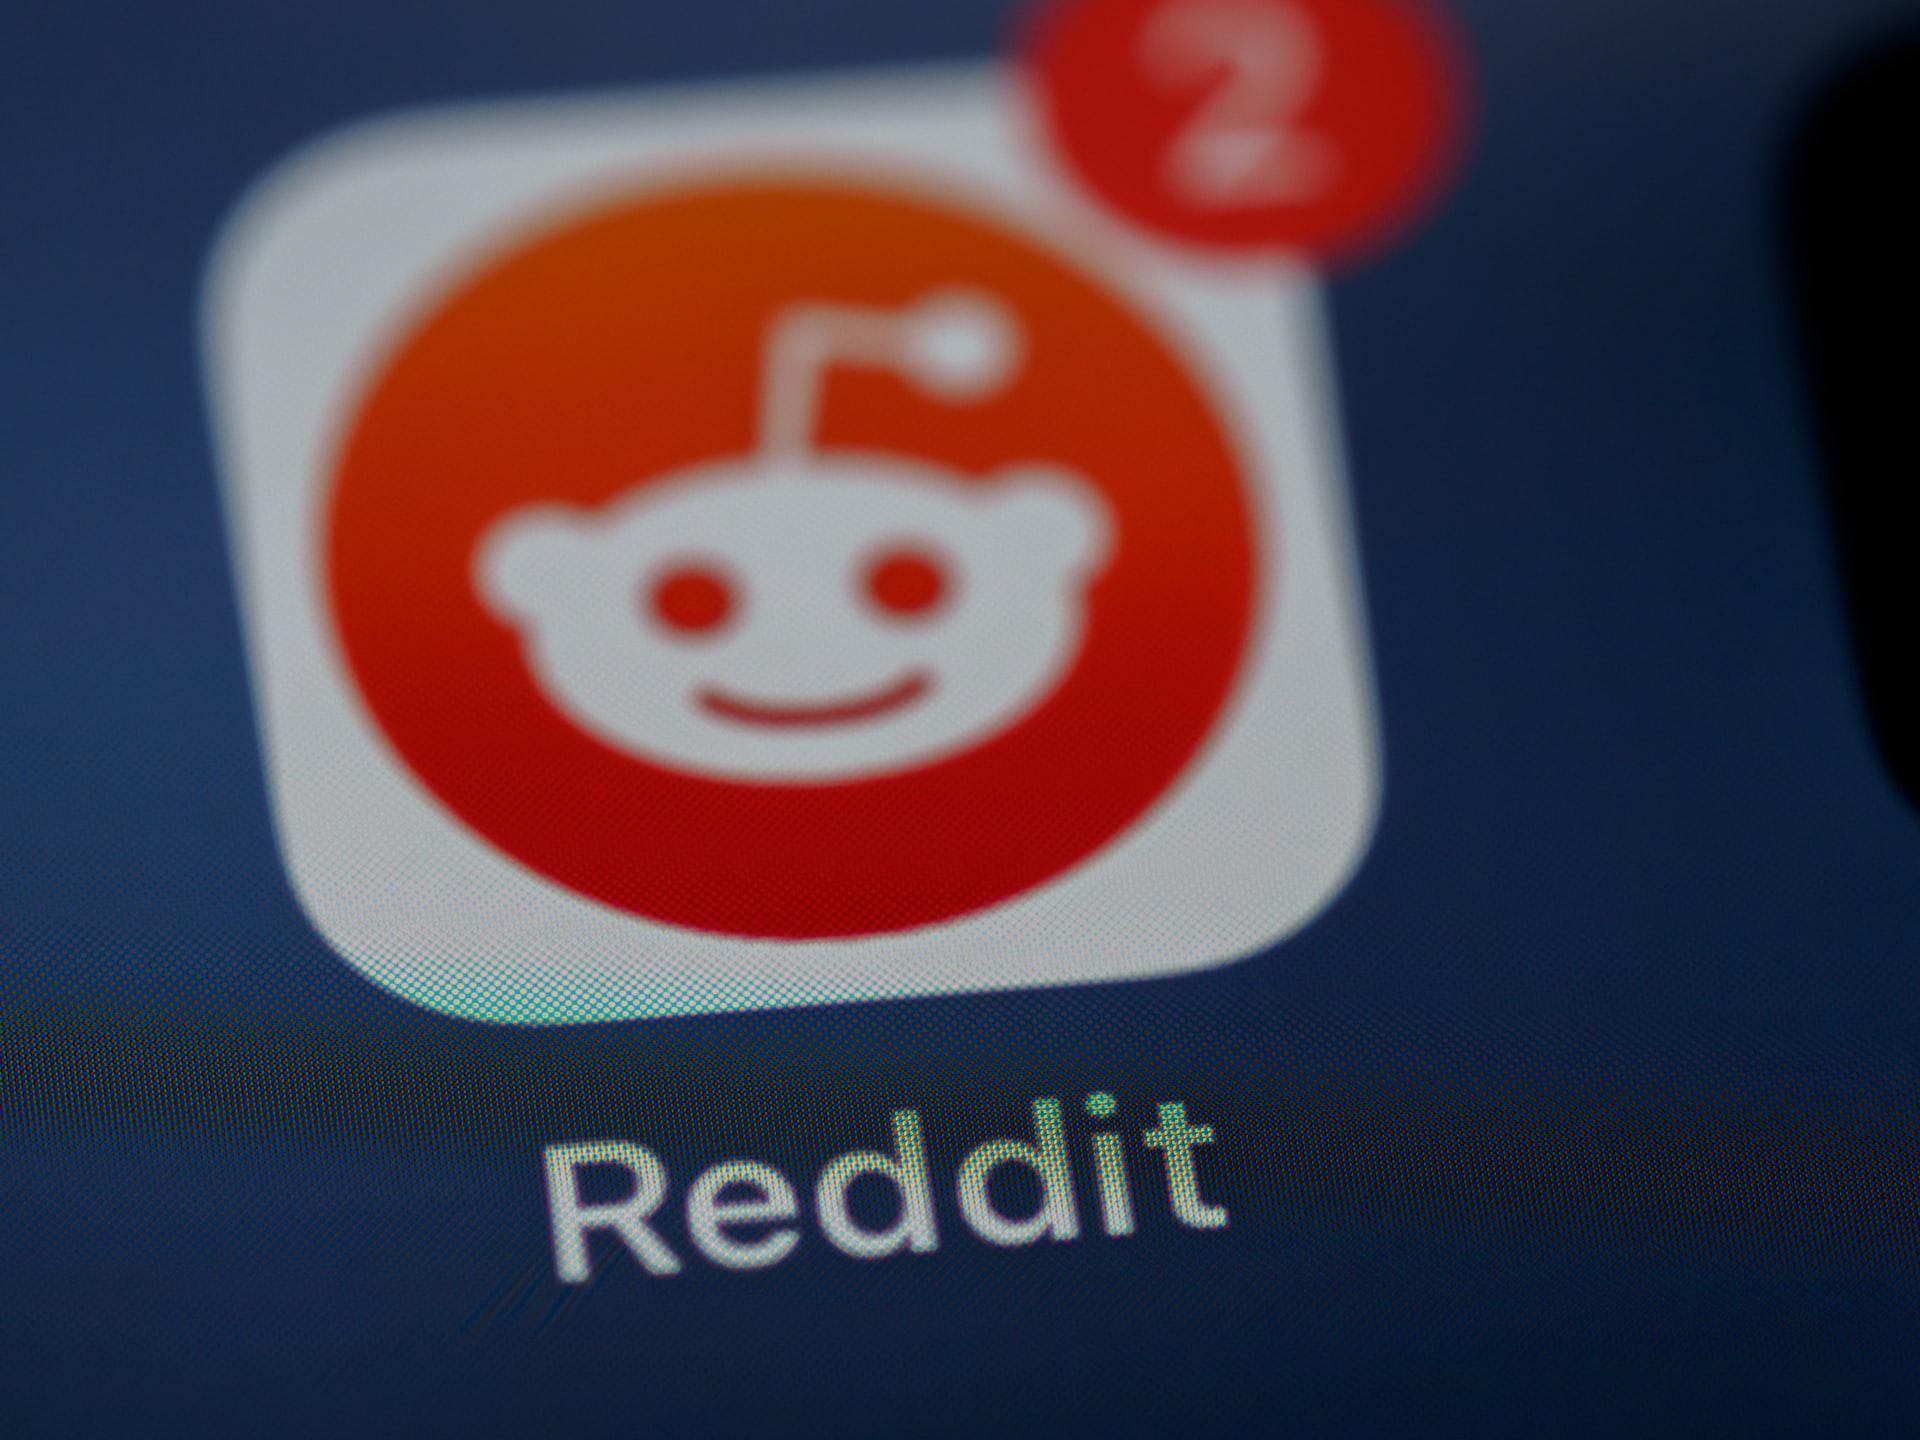 Онлайн-форум Reddit планирует выход на IPO - Бизнес